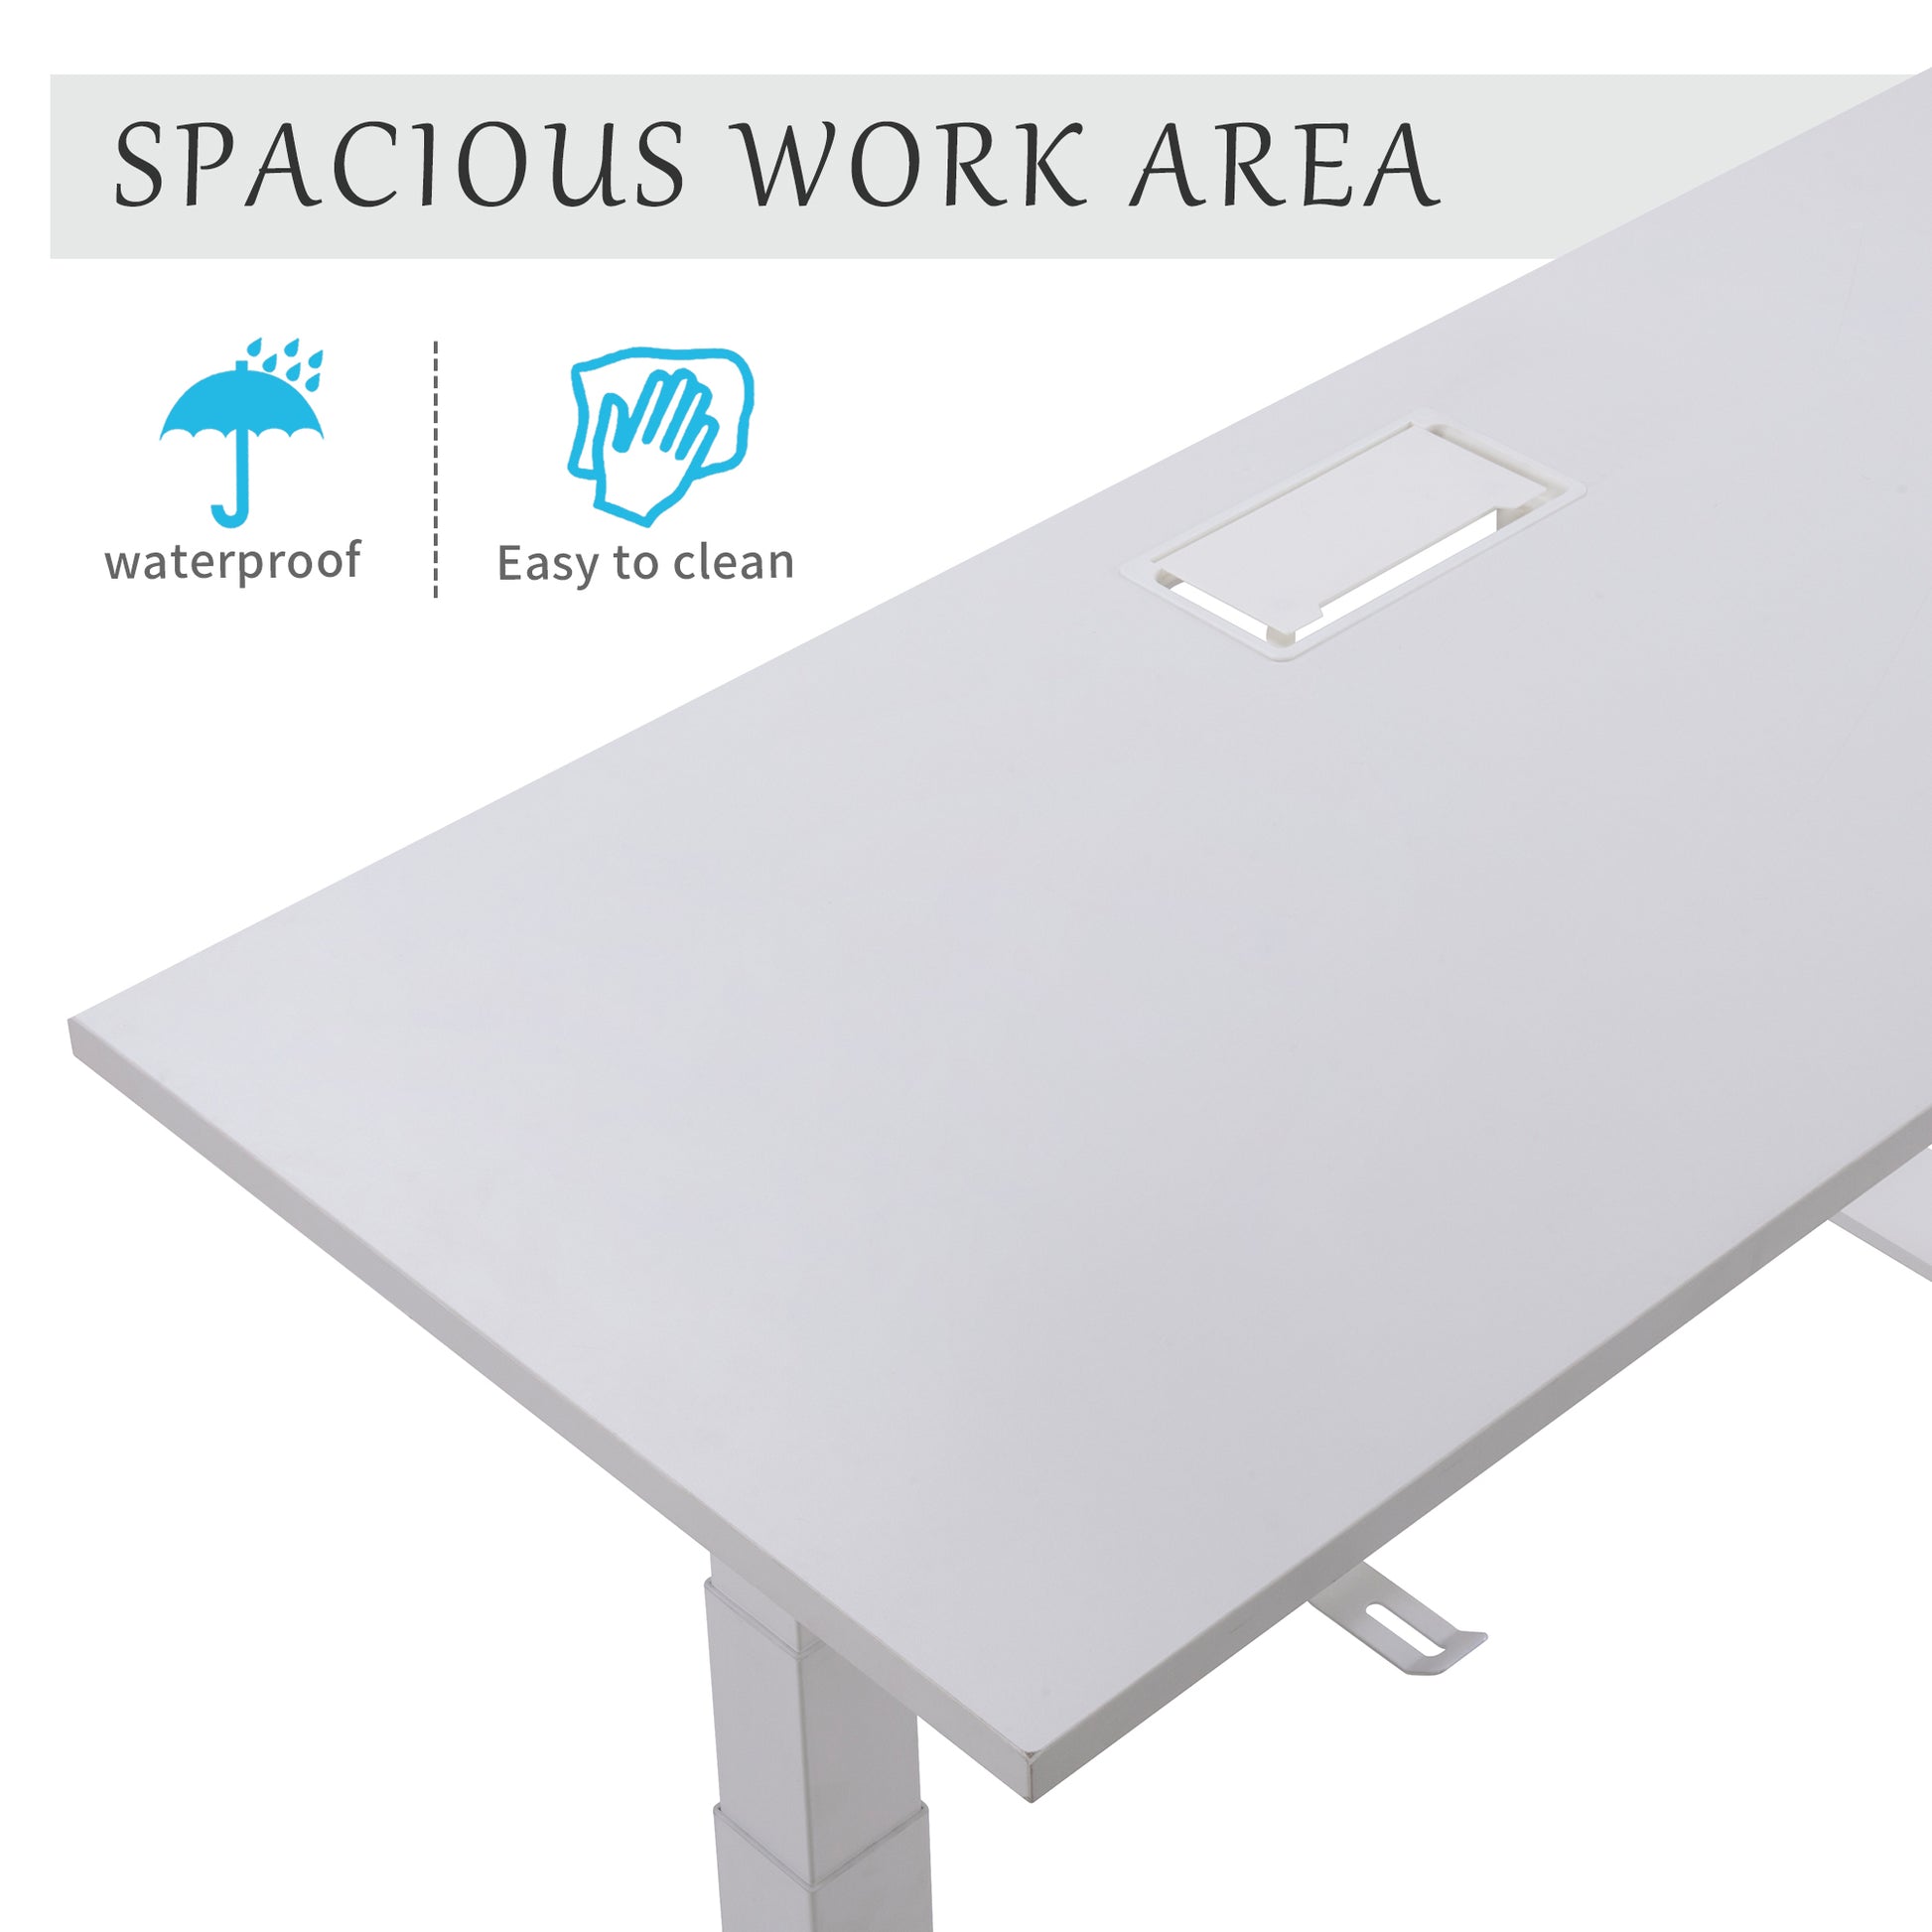 Adjustable Electric Standing Desk White